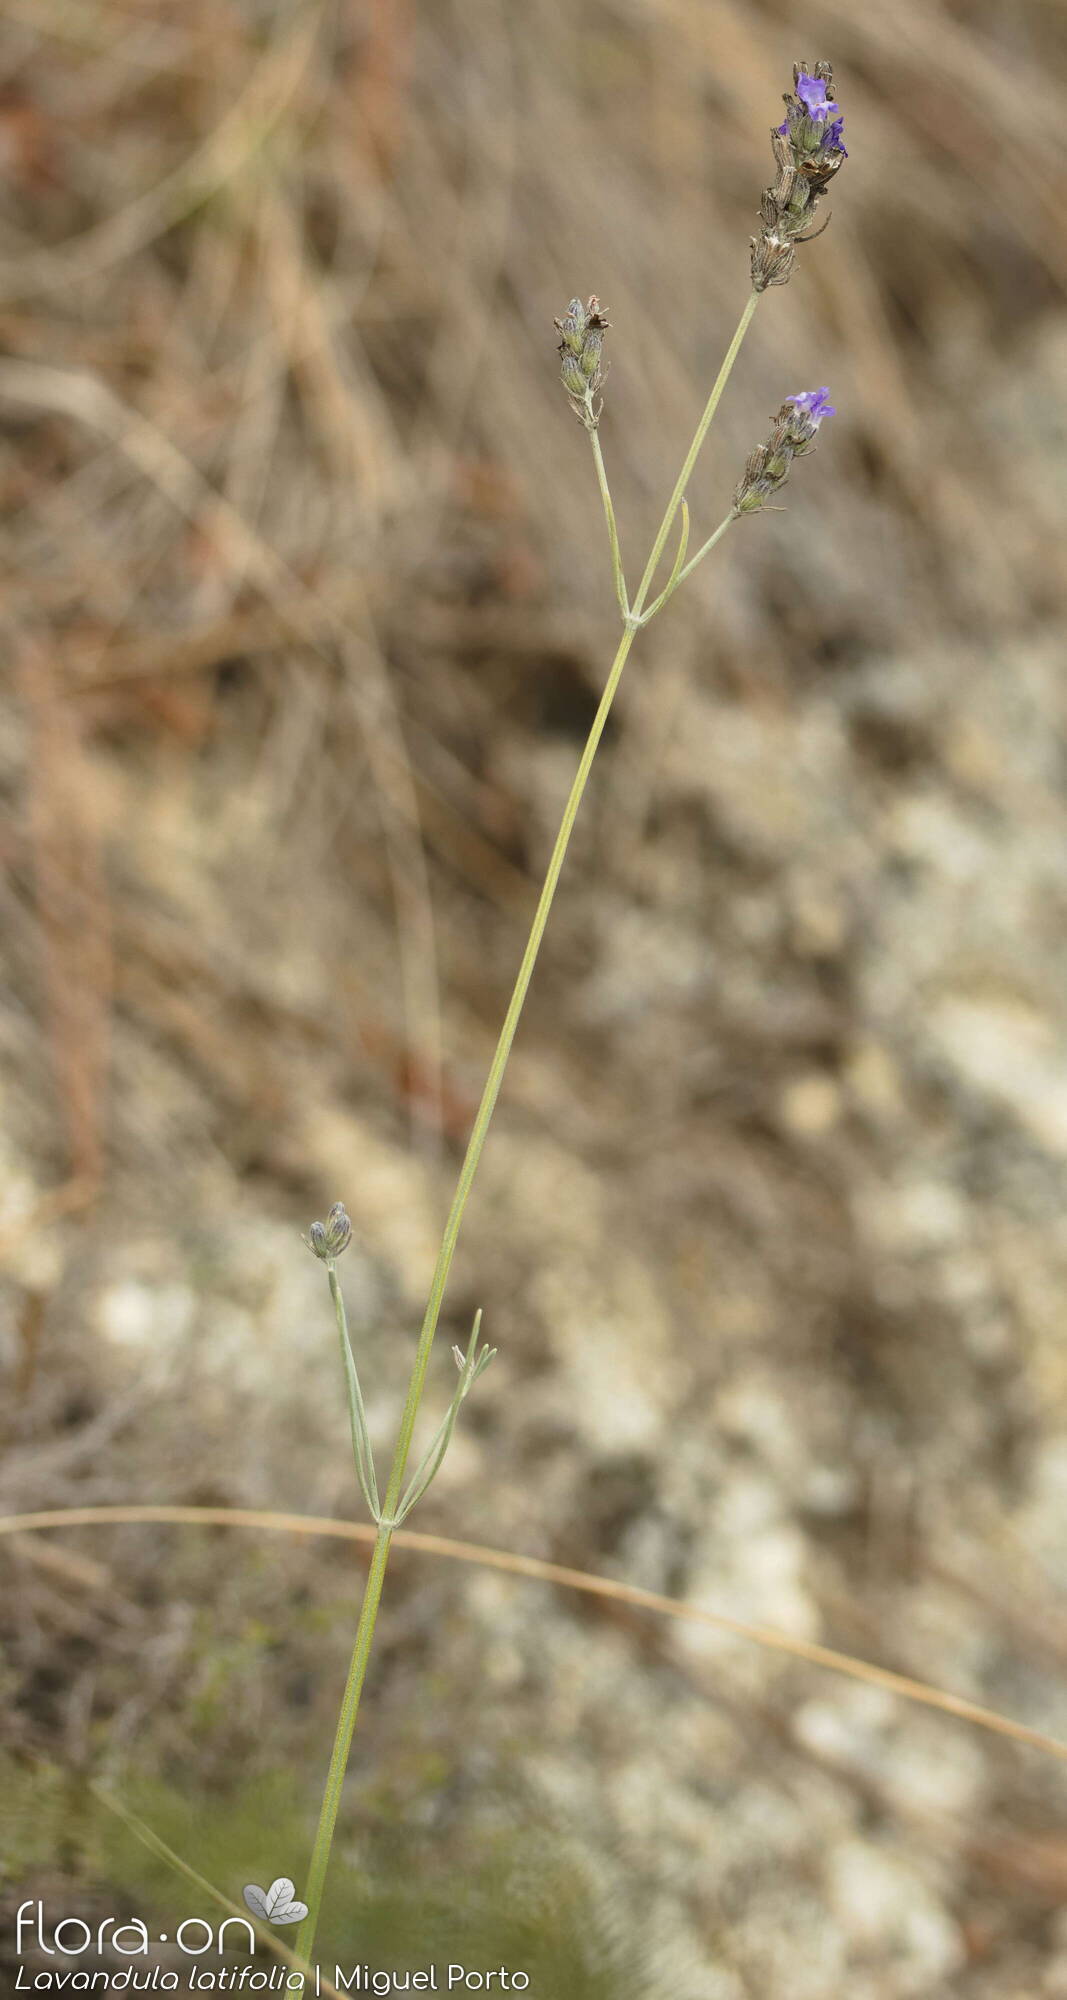 Lavandula latifolia - Flor (geral) | Miguel Porto; CC BY-NC 4.0